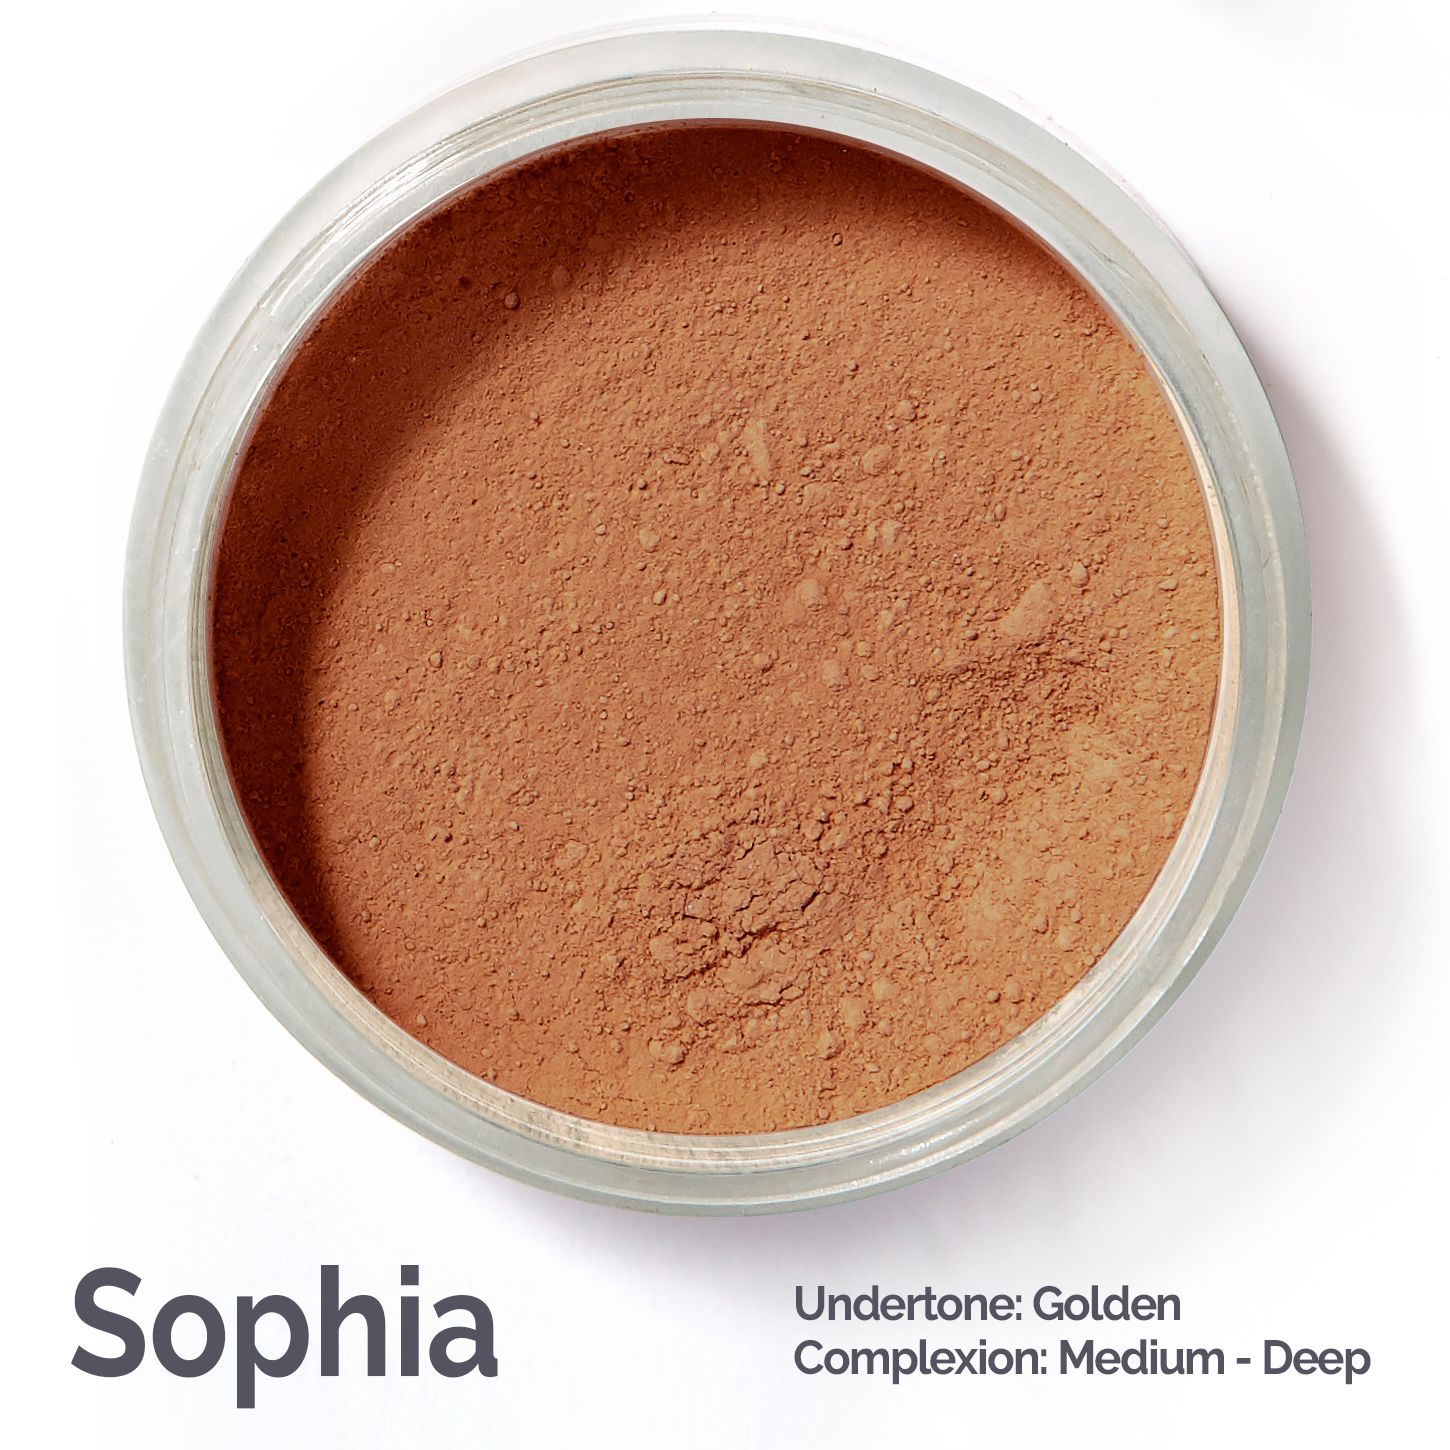 Sophia color swatch #sofia